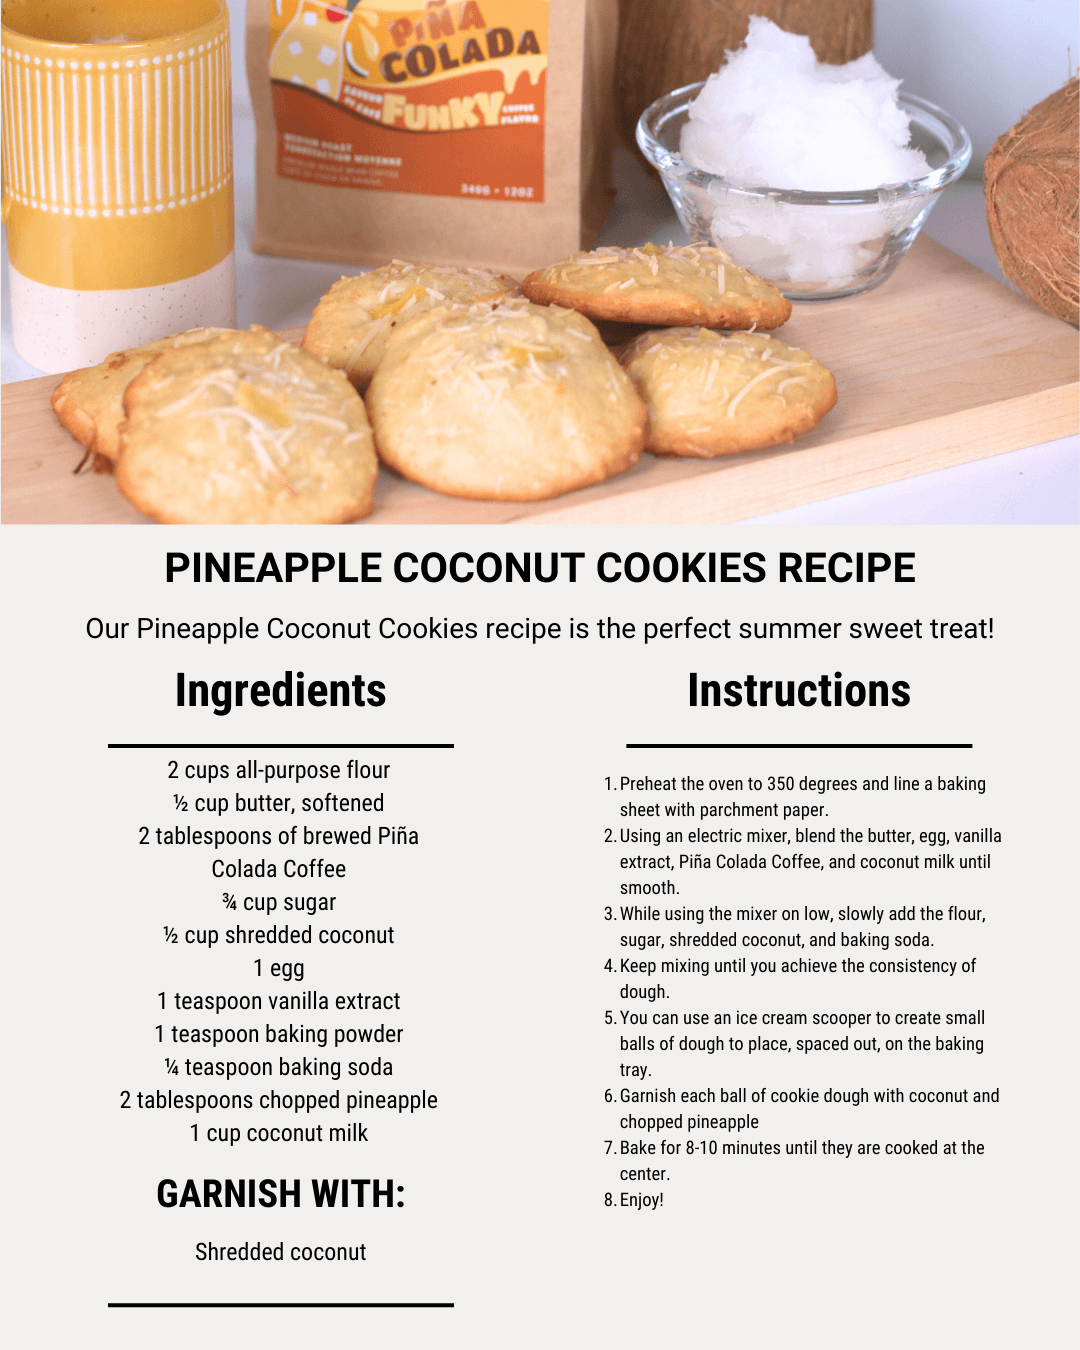 The steps to make Zavida's Pineapple Coconut Cookies recipe